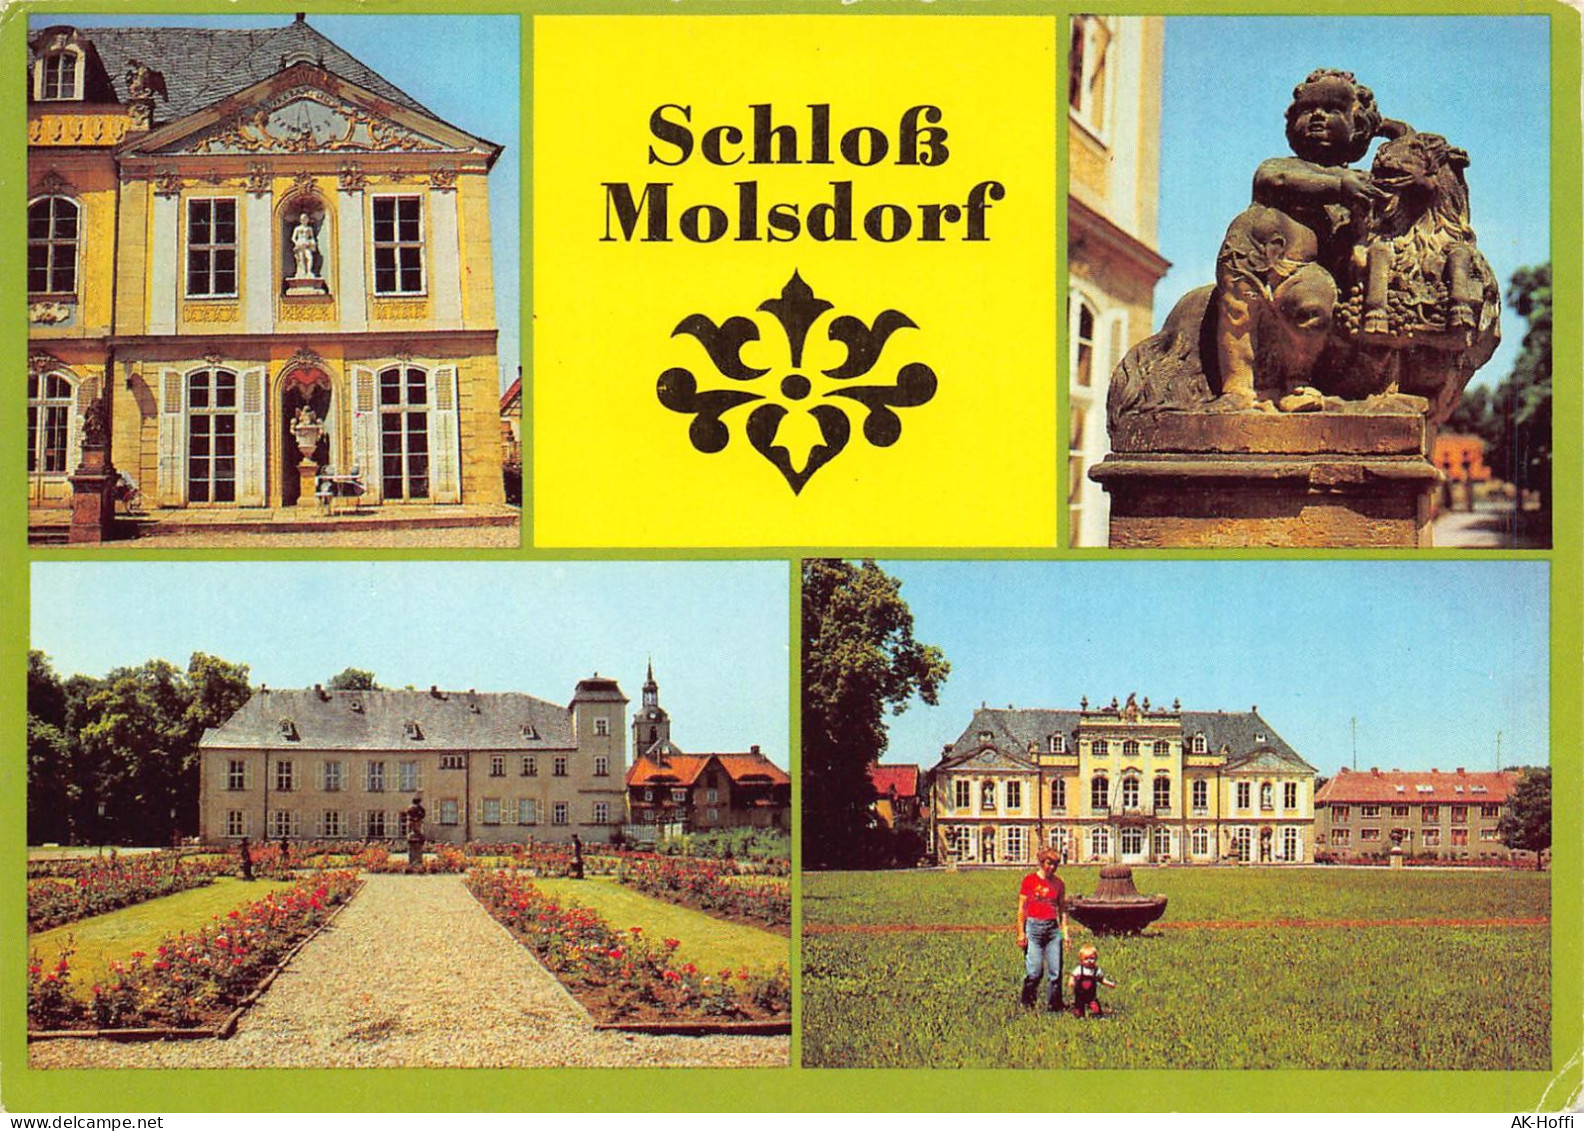 Molsdorf Bei Erfurt In Thüringen, Schloß, Museen Der Stadt Erfurt, Park Und Schloß Molsdorf - Erfurt